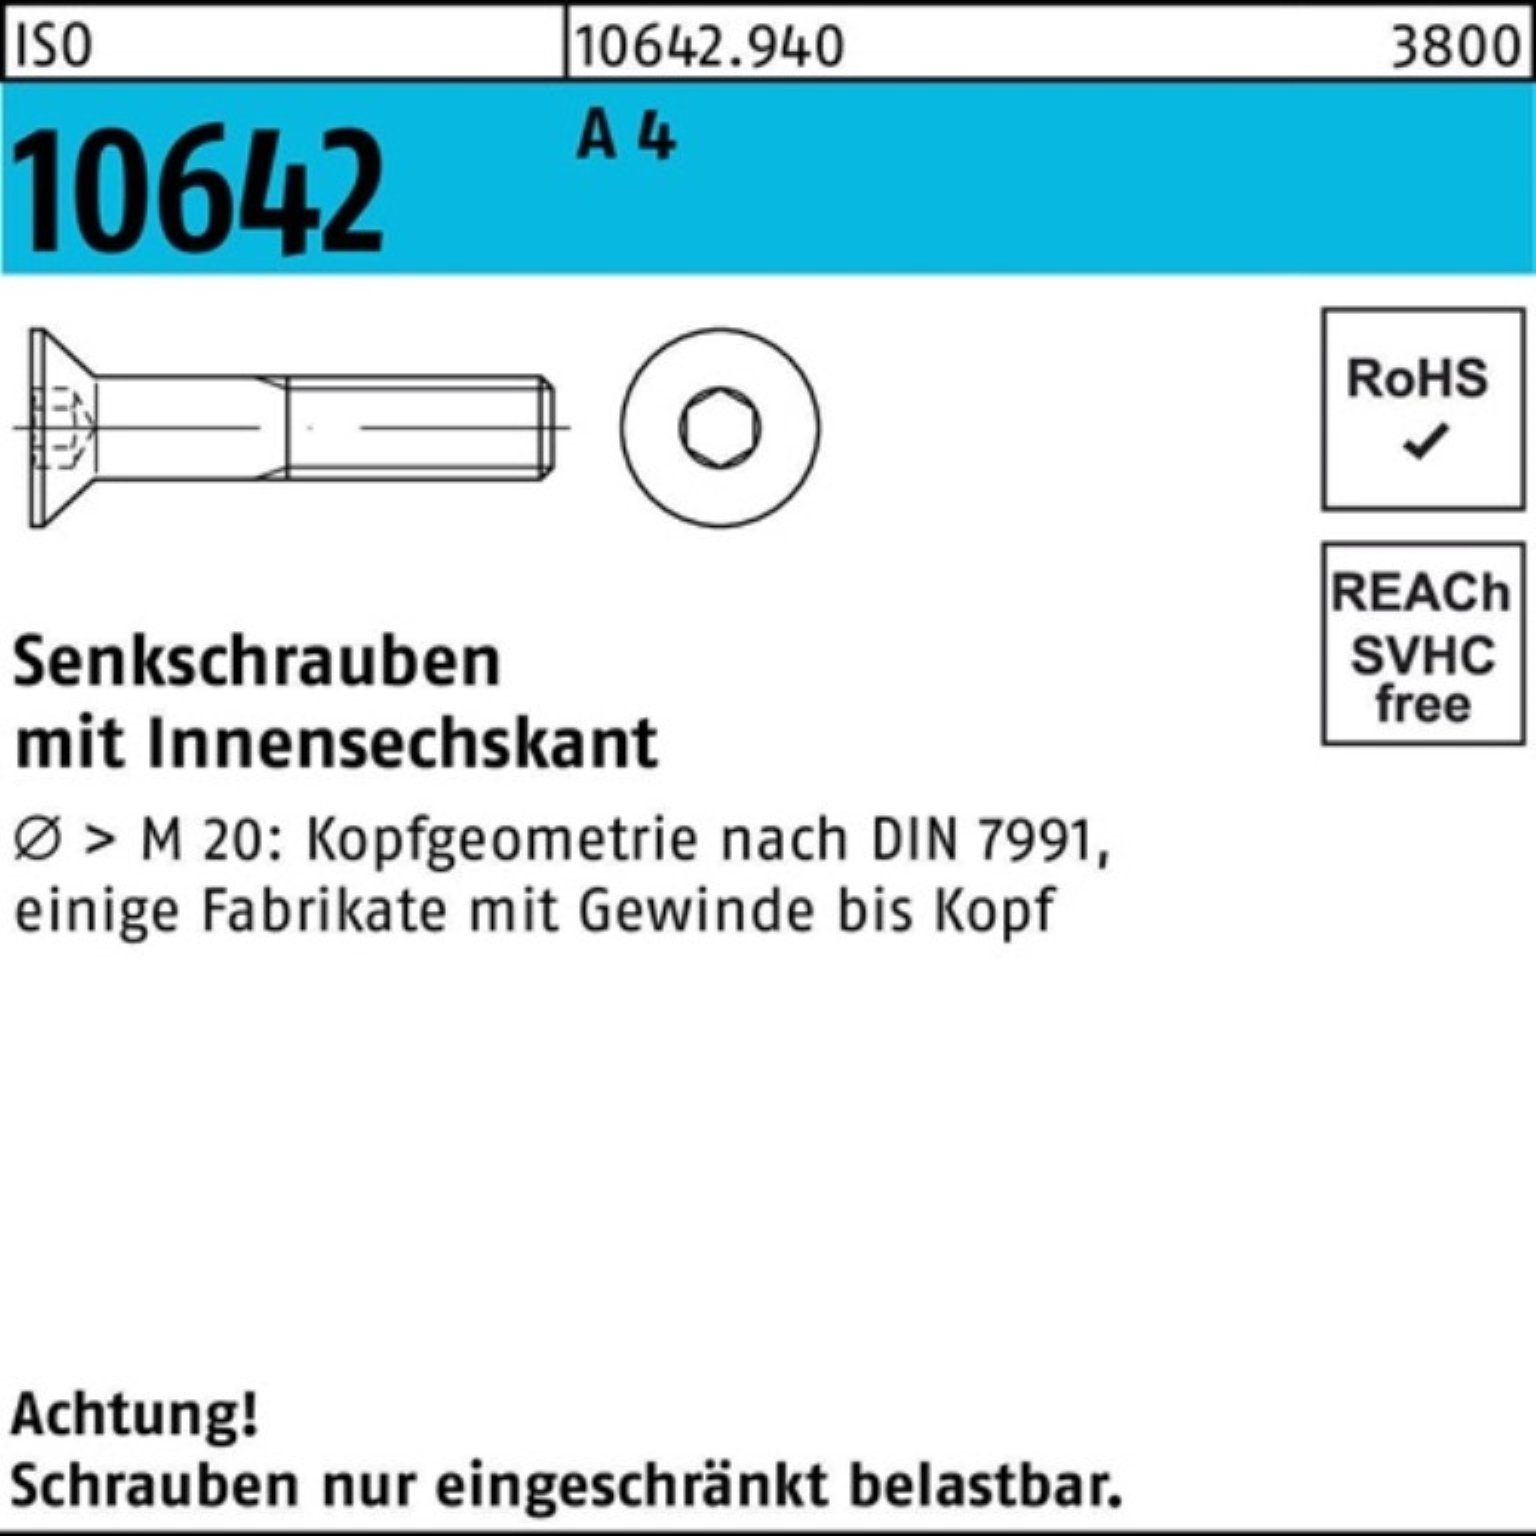 [Täglich zur Bestellung geöffnet] Reyher Senkschraube 100er Senkschraube 50 1 Innen-6kt 4 1 10642 A M16x ISO Stück ISO Pack